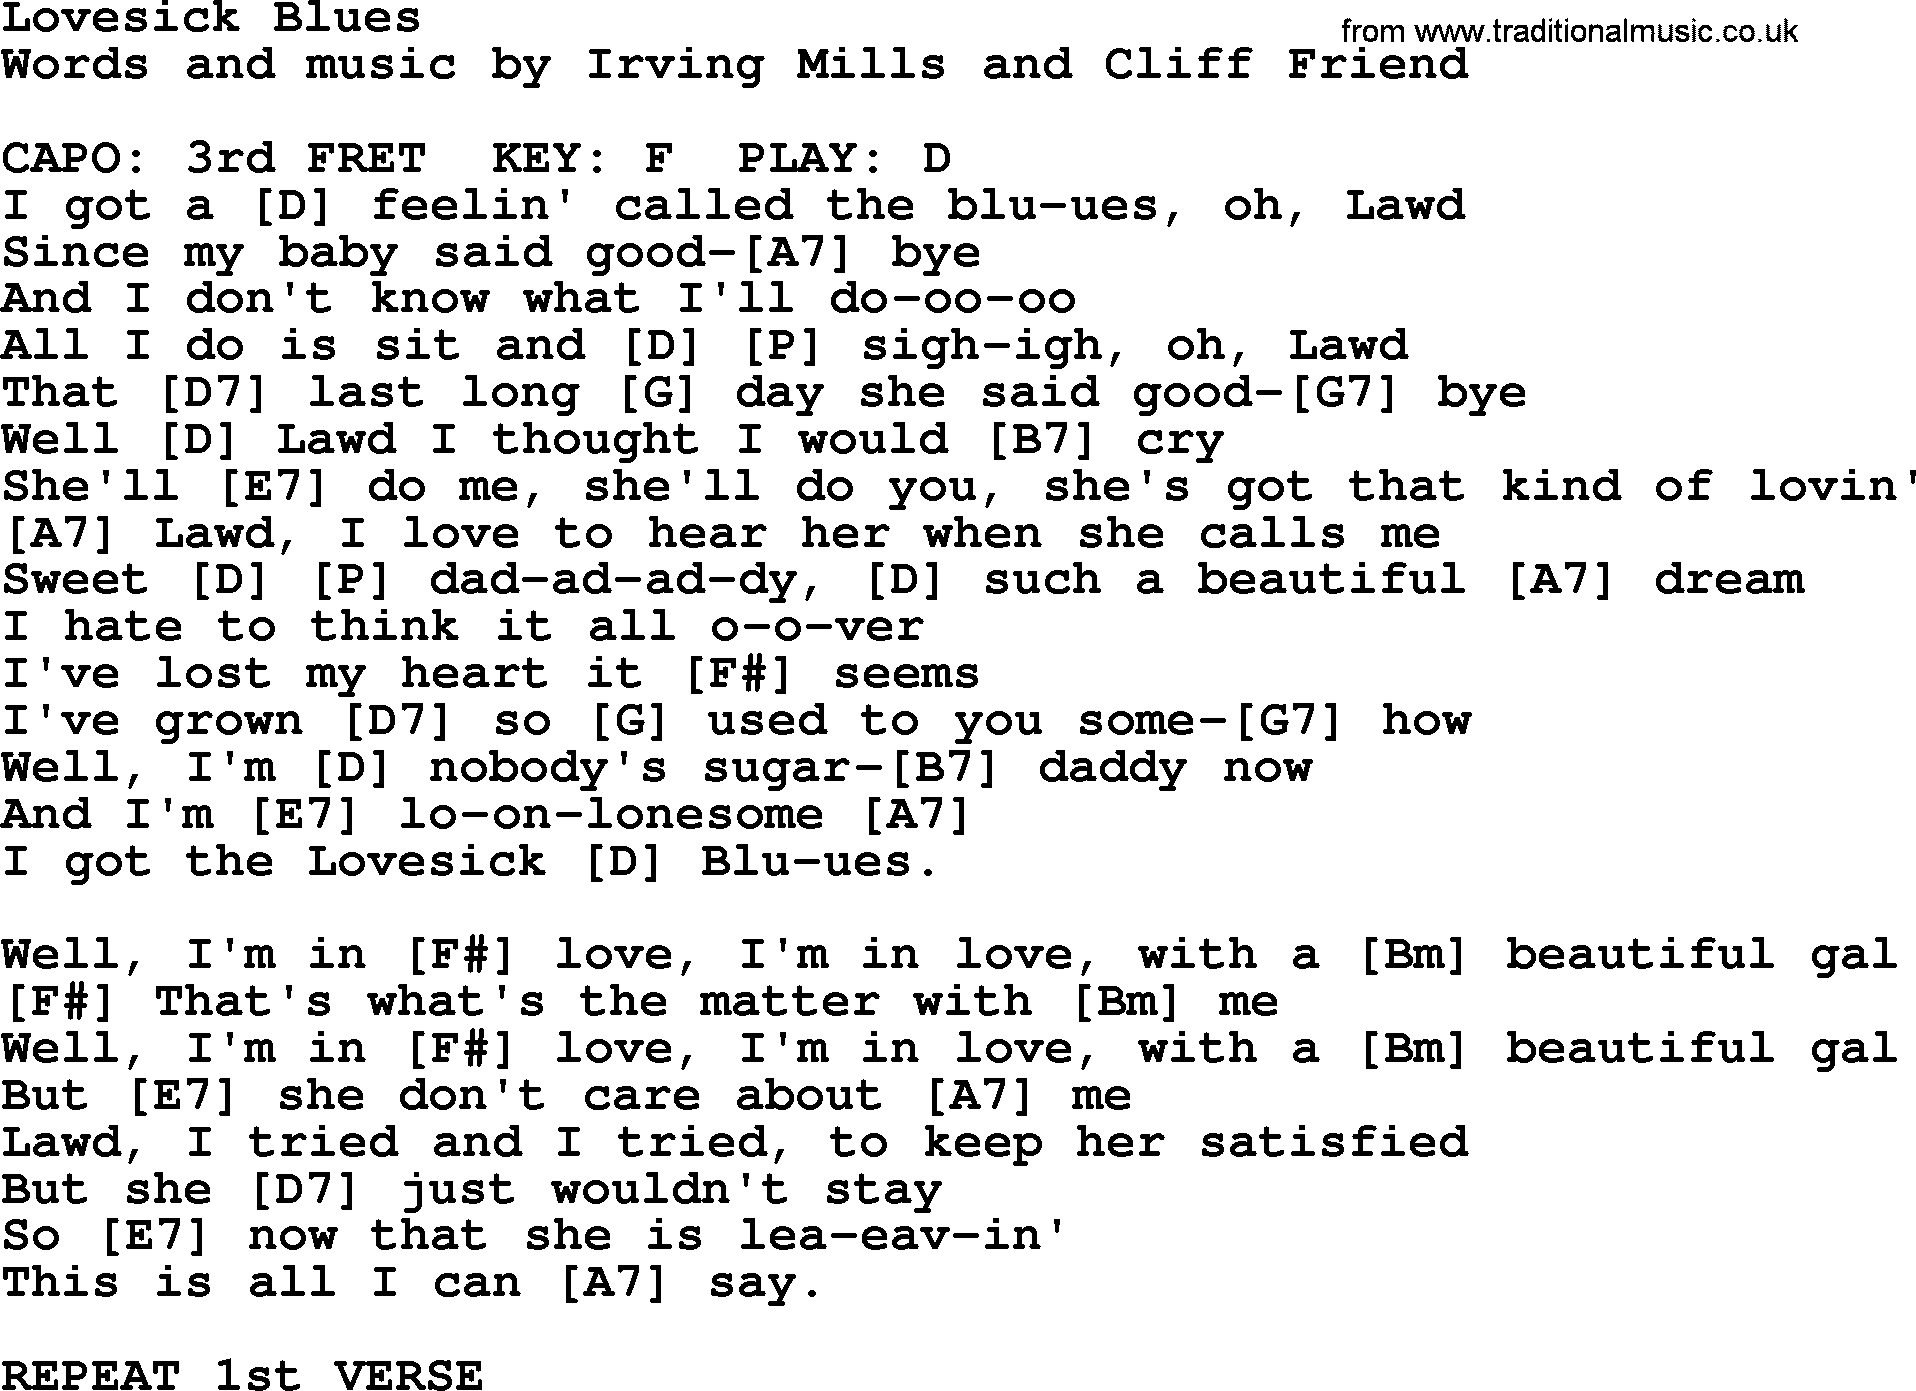 Hank Williams song Lovesick Blues, lyrics and chords